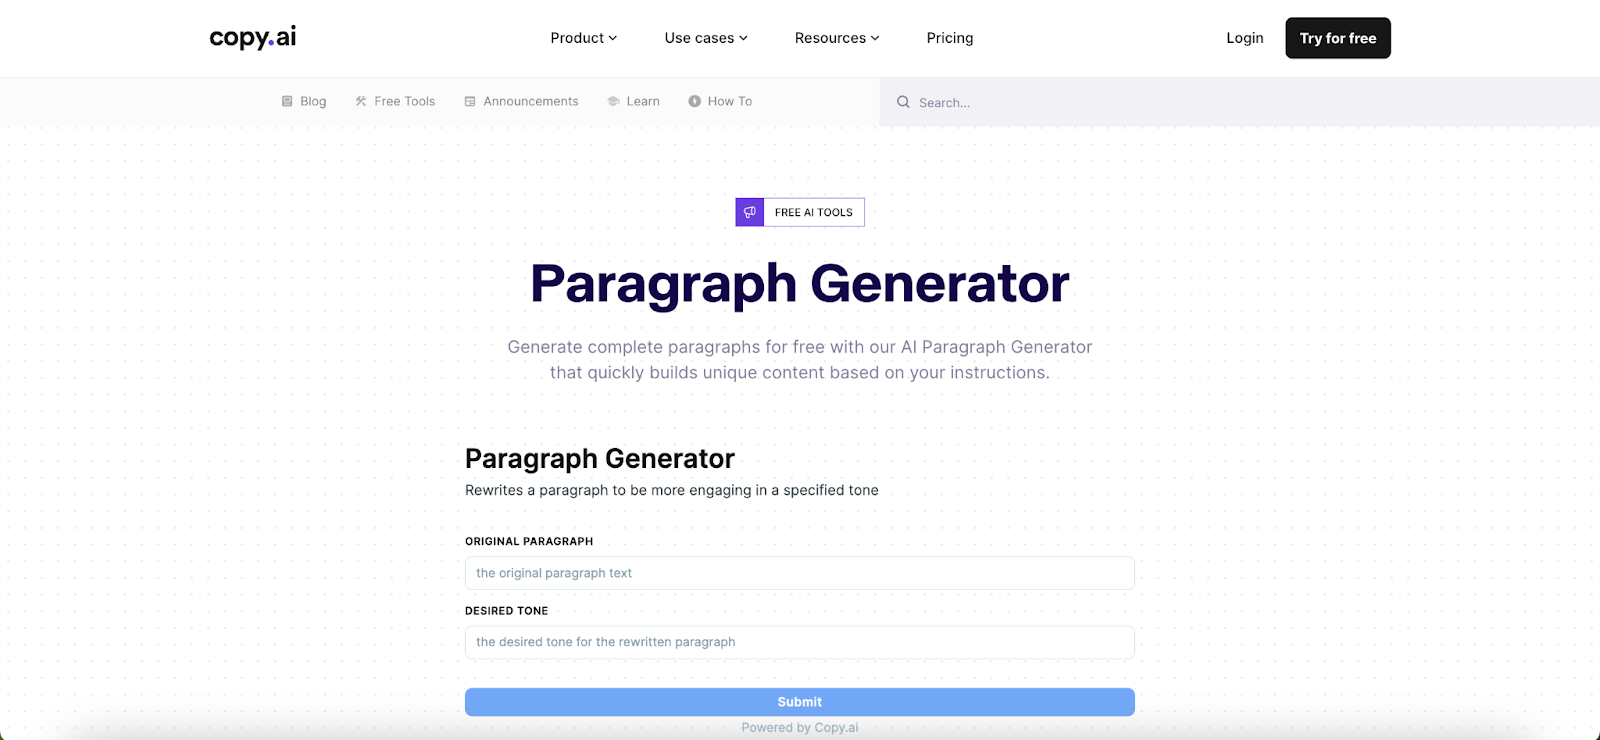 AI paragraph generator tools - Copy.ai Paragraph Generator